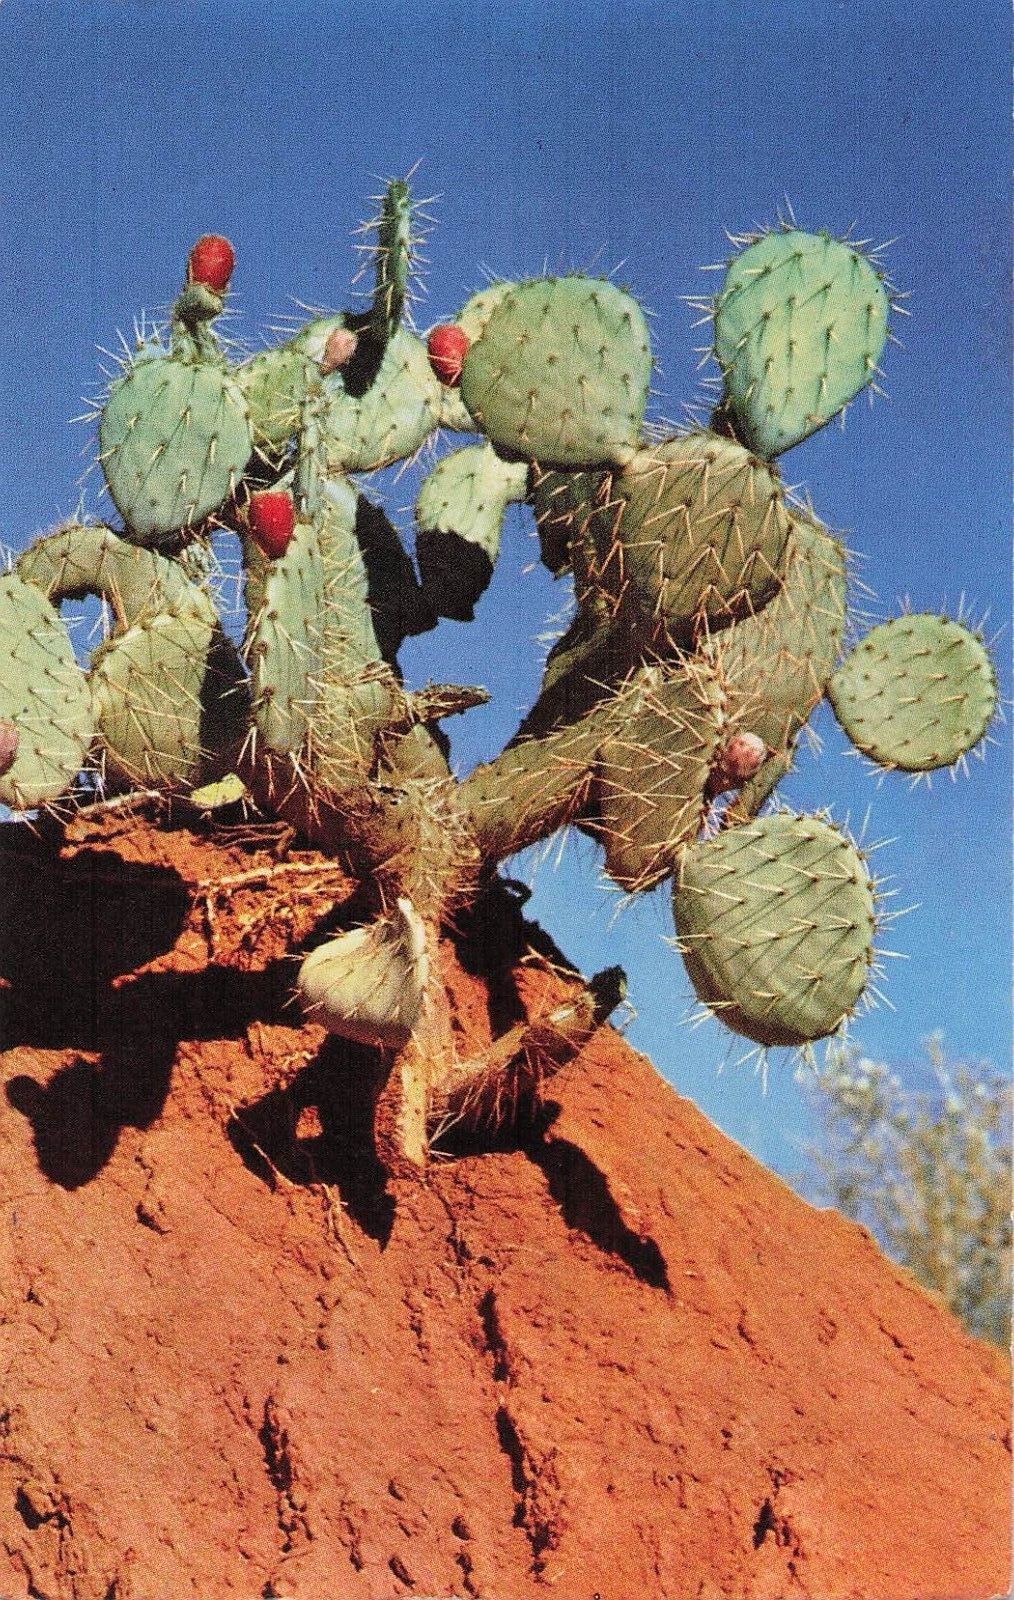 Prickly Pear Cactus Phoenix Arizona